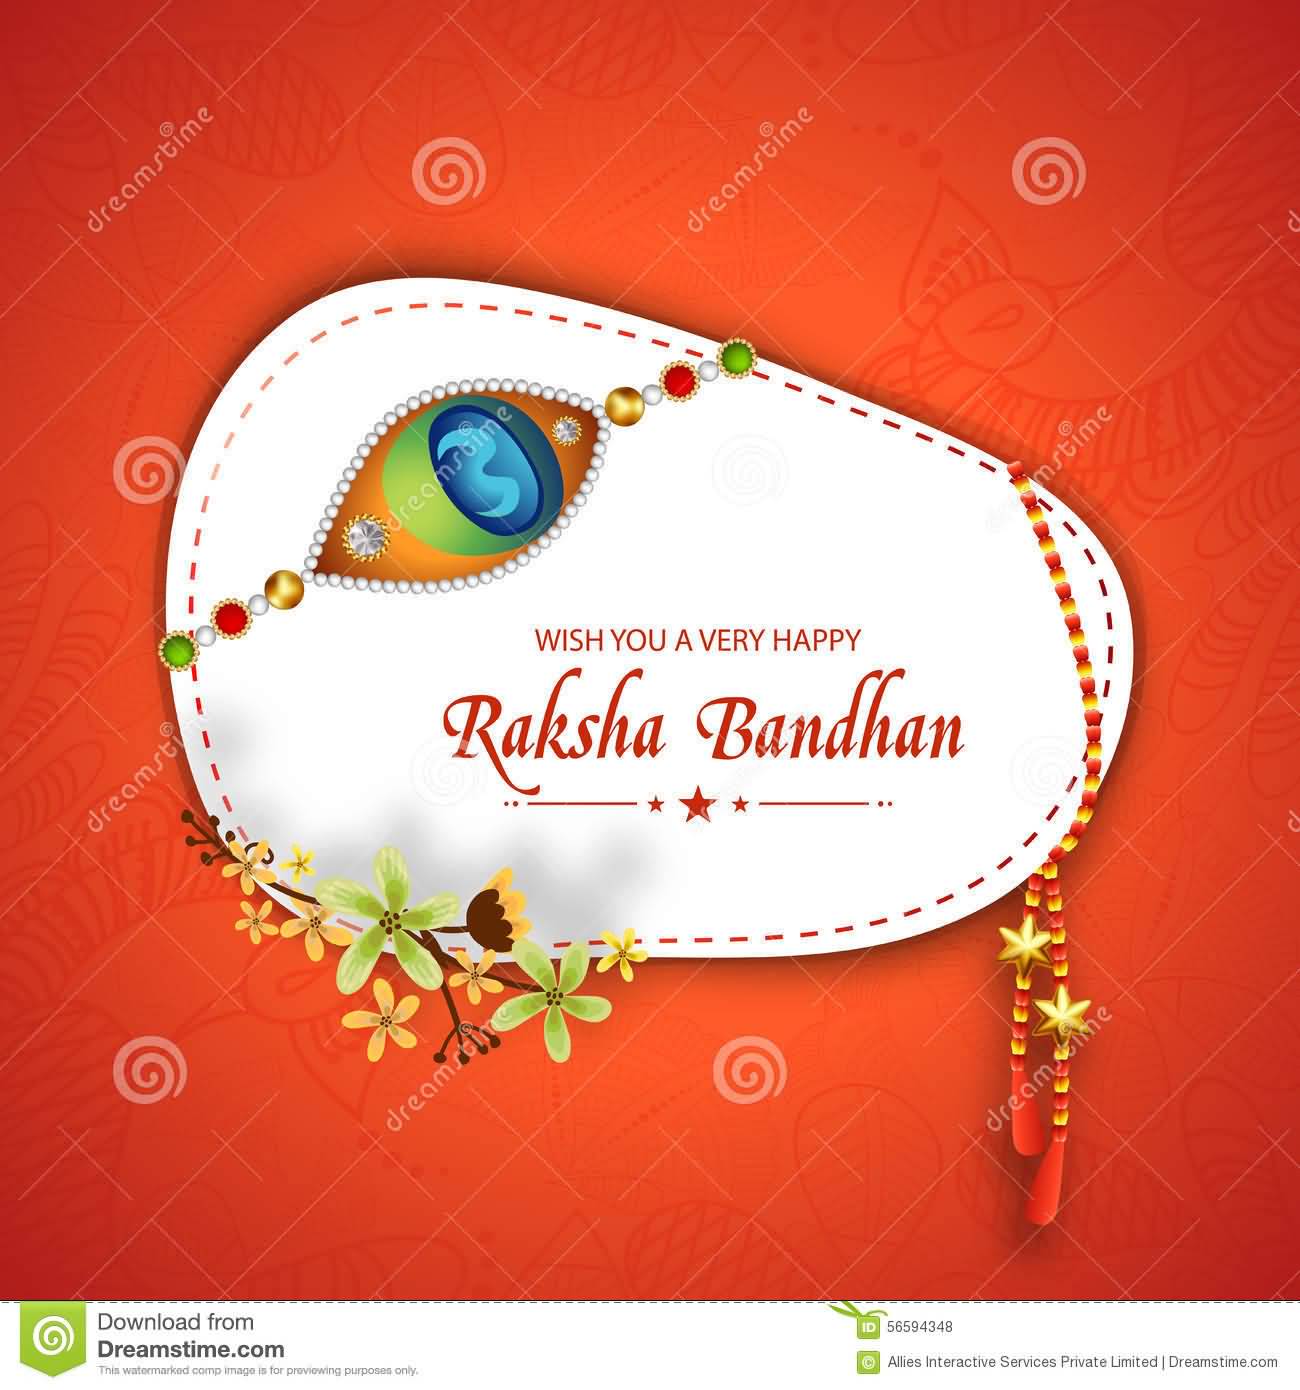 Wish You A Very Happy Raksha Bandhan Card